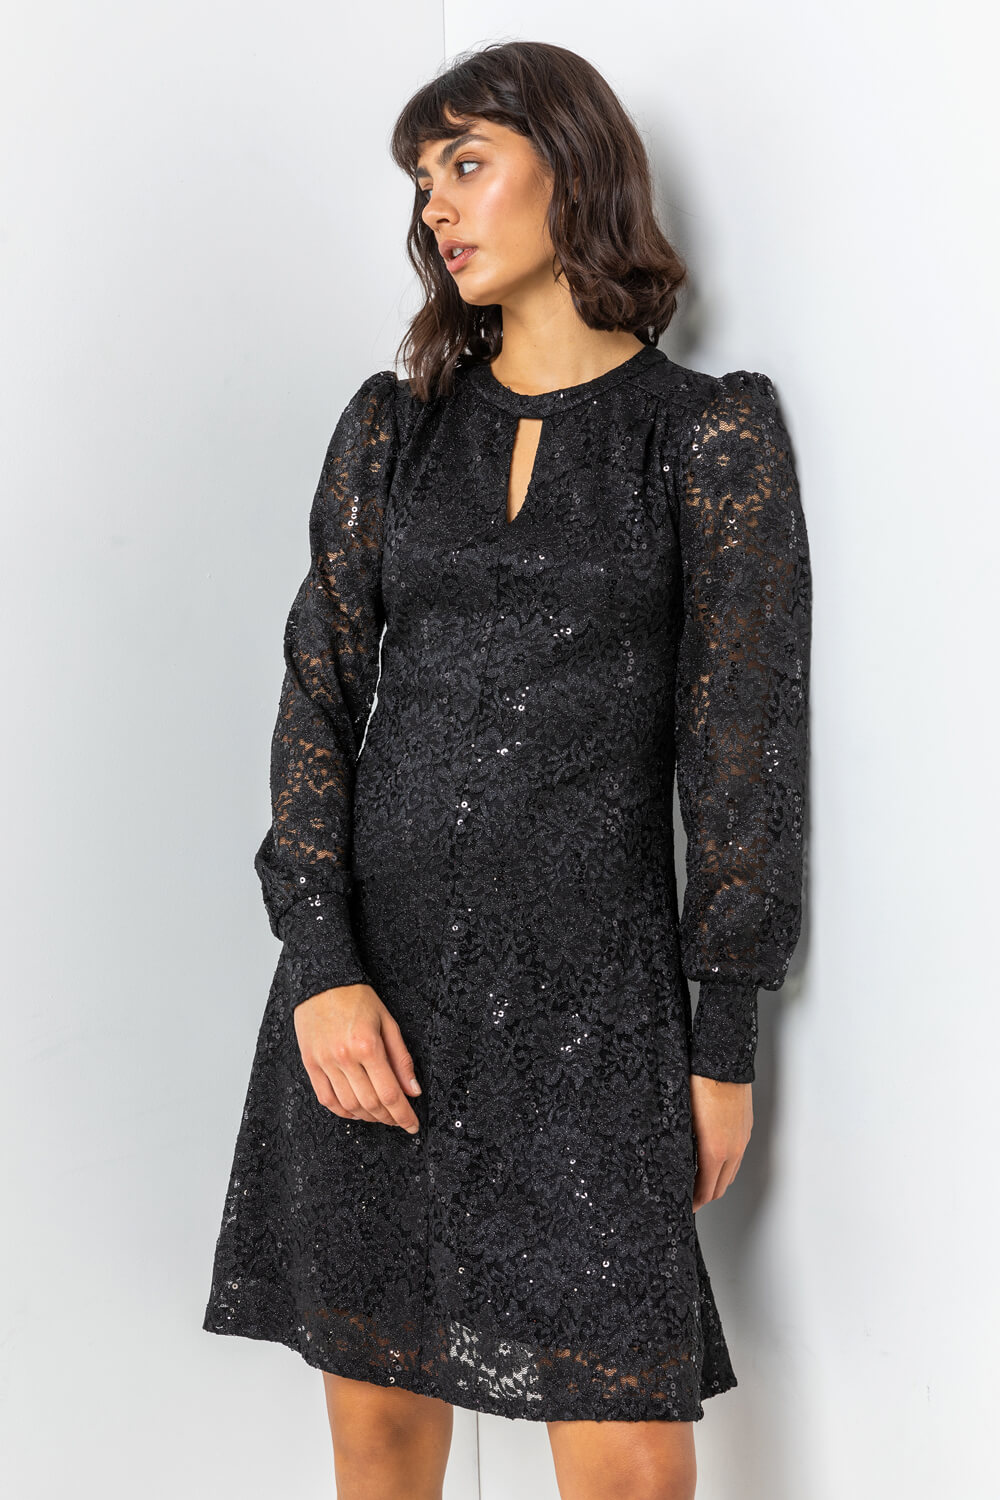 Black Lace Sparkle Swing Dress, Image 5 of 5